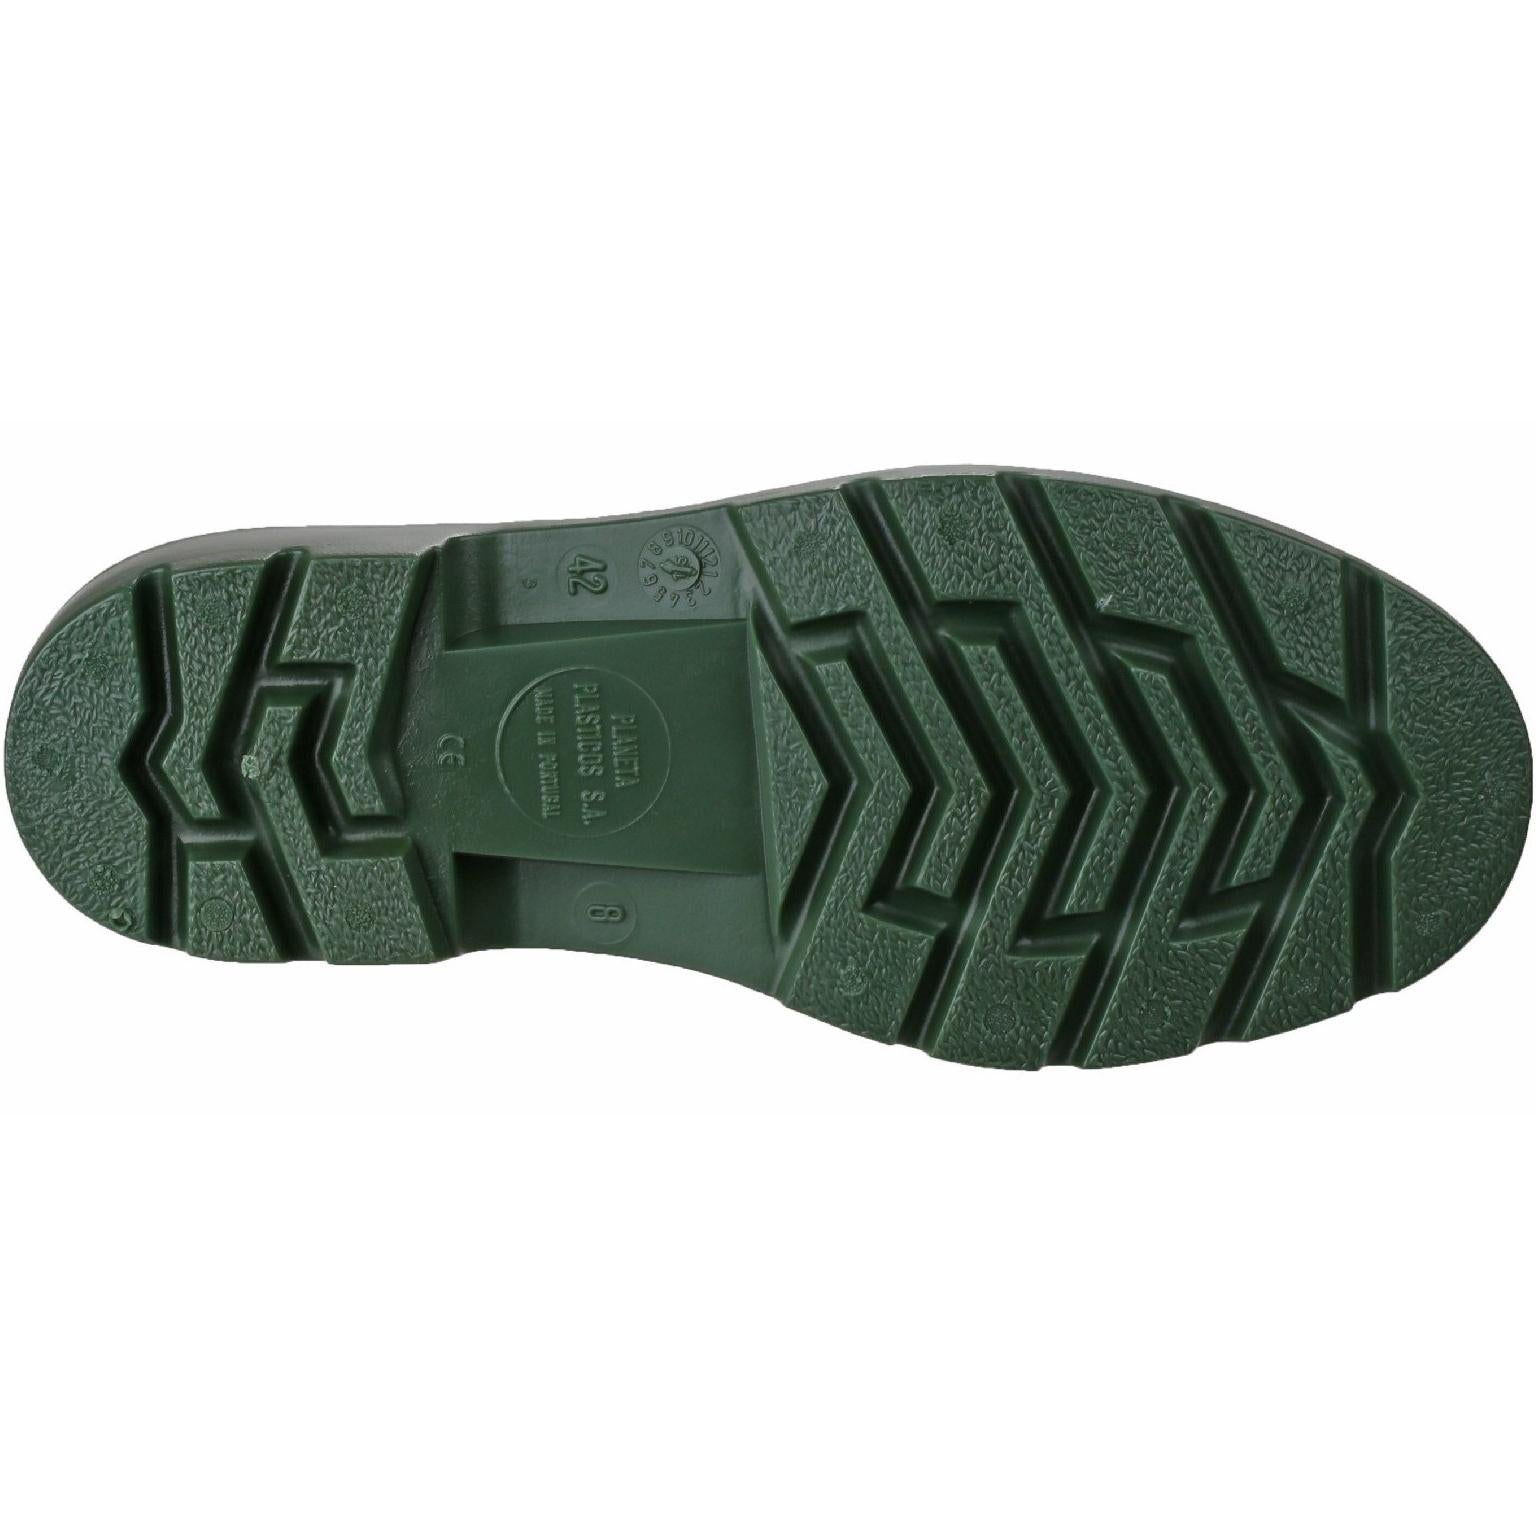 Dunlop Protective Footwear (duo19) Pricemastor Wellington Boots